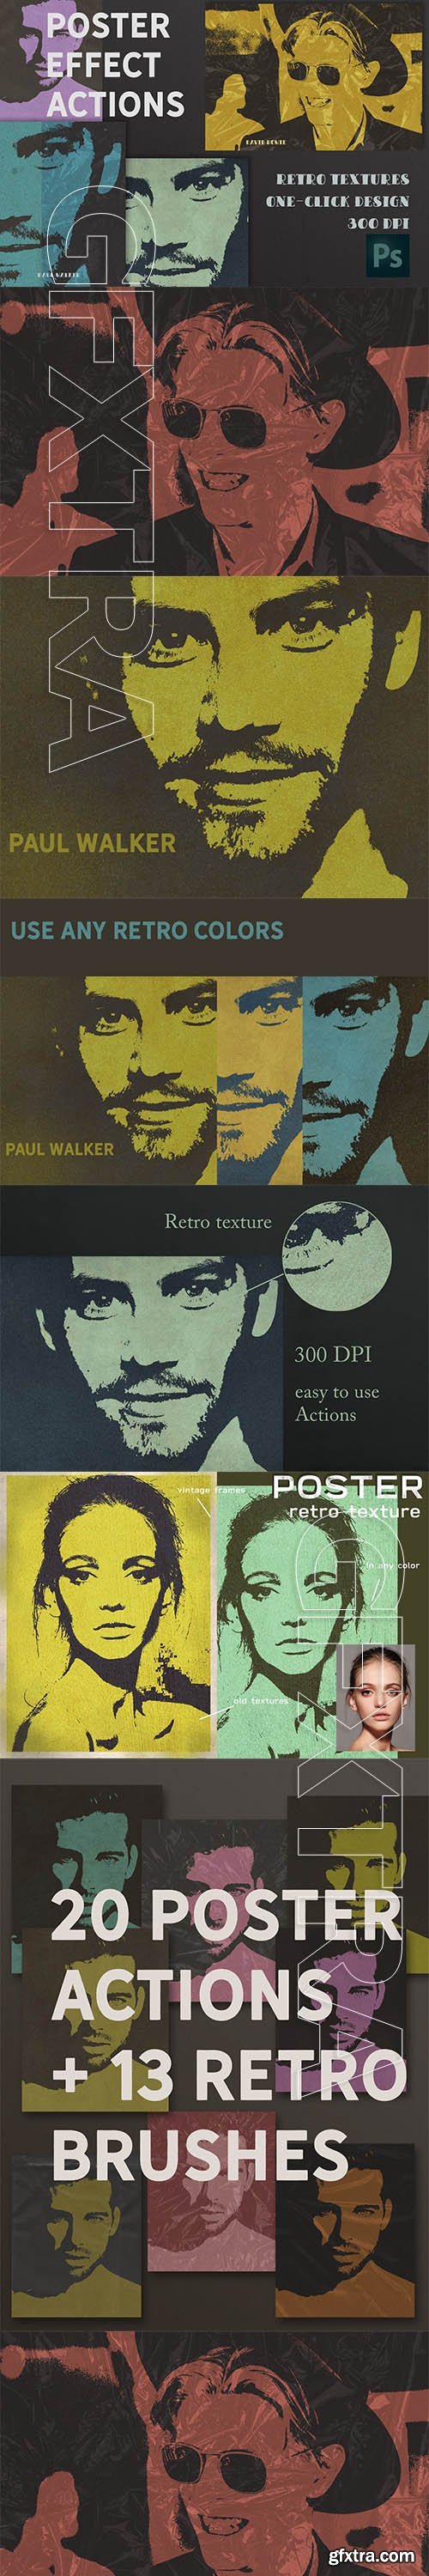 Poster Retro Color Effect Photoshop 4889884